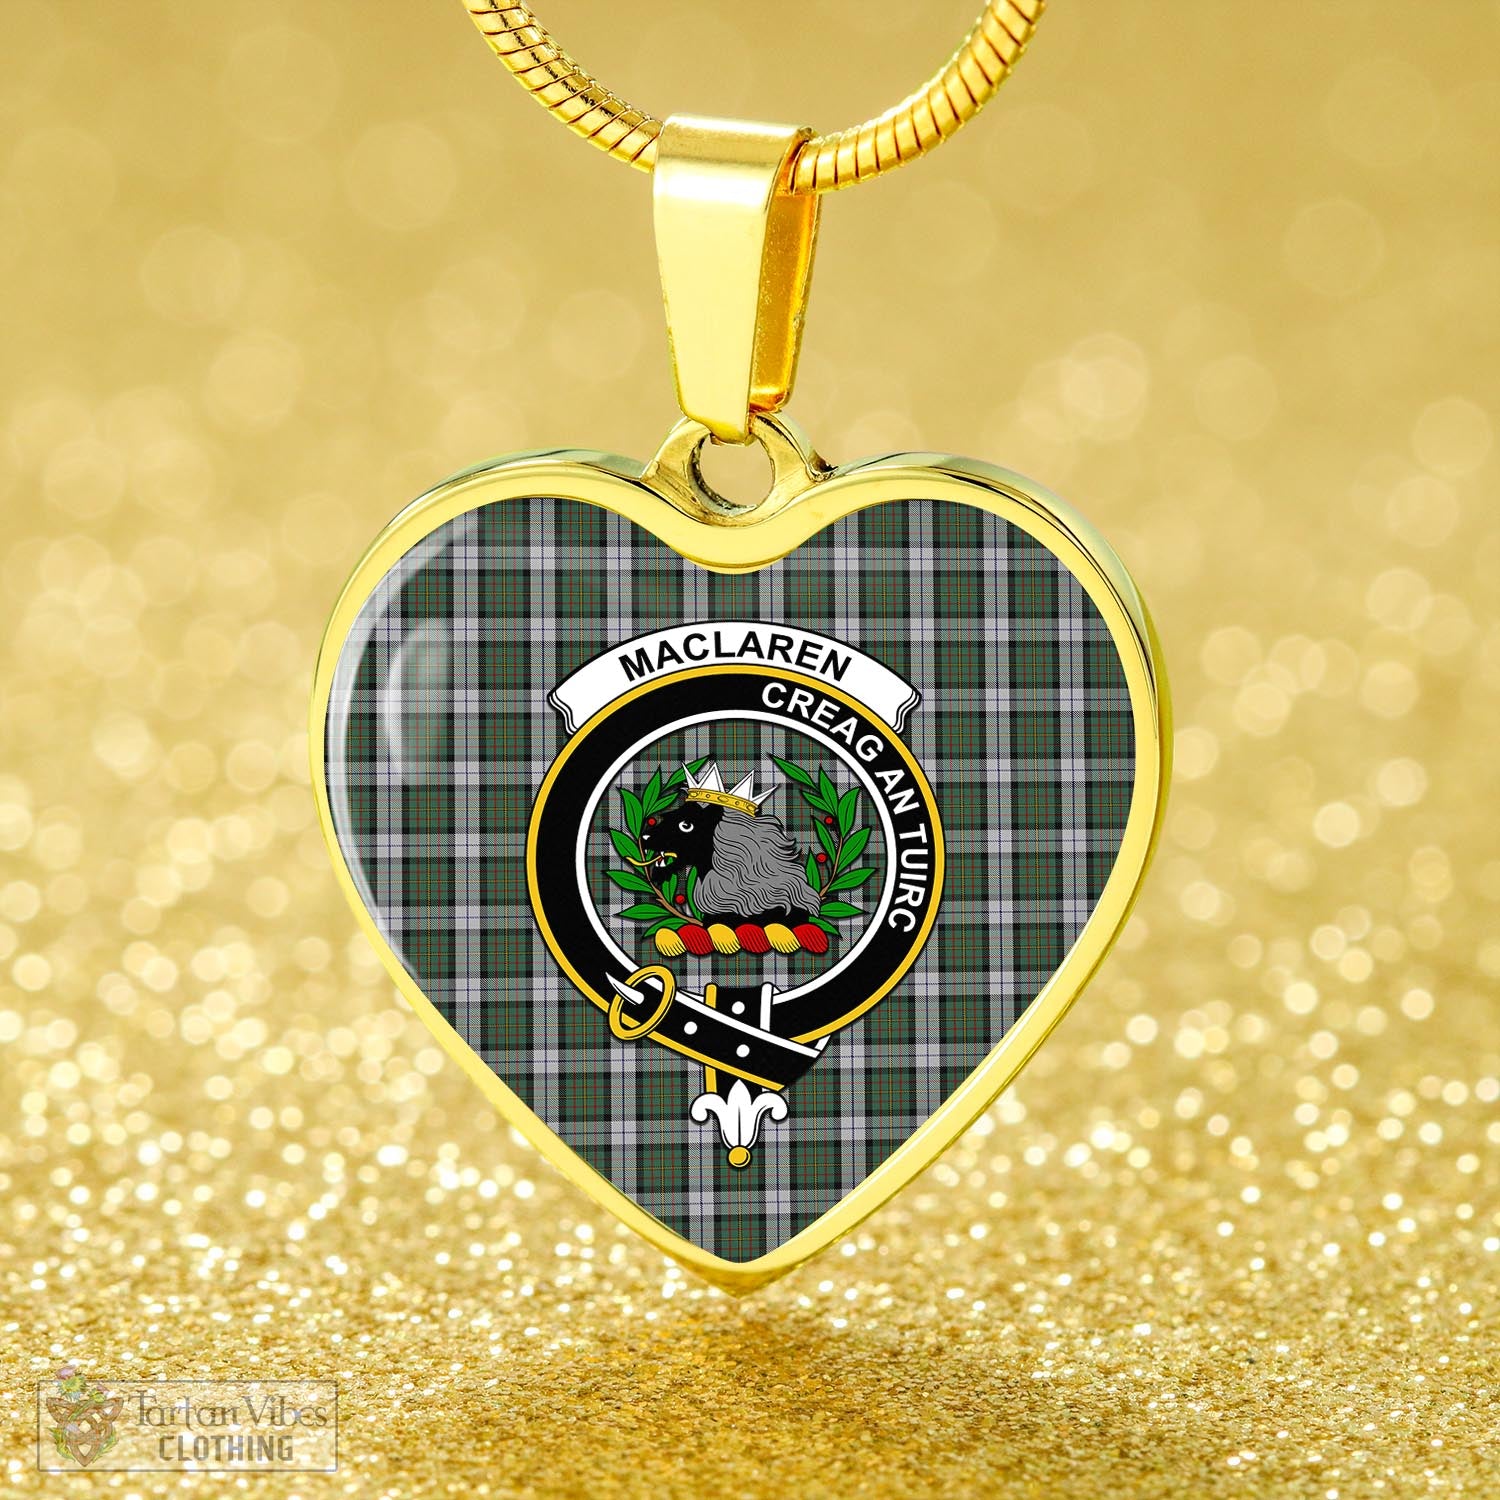 Tartan Vibes Clothing MacLaren Dress Tartan Heart Necklace with Family Crest